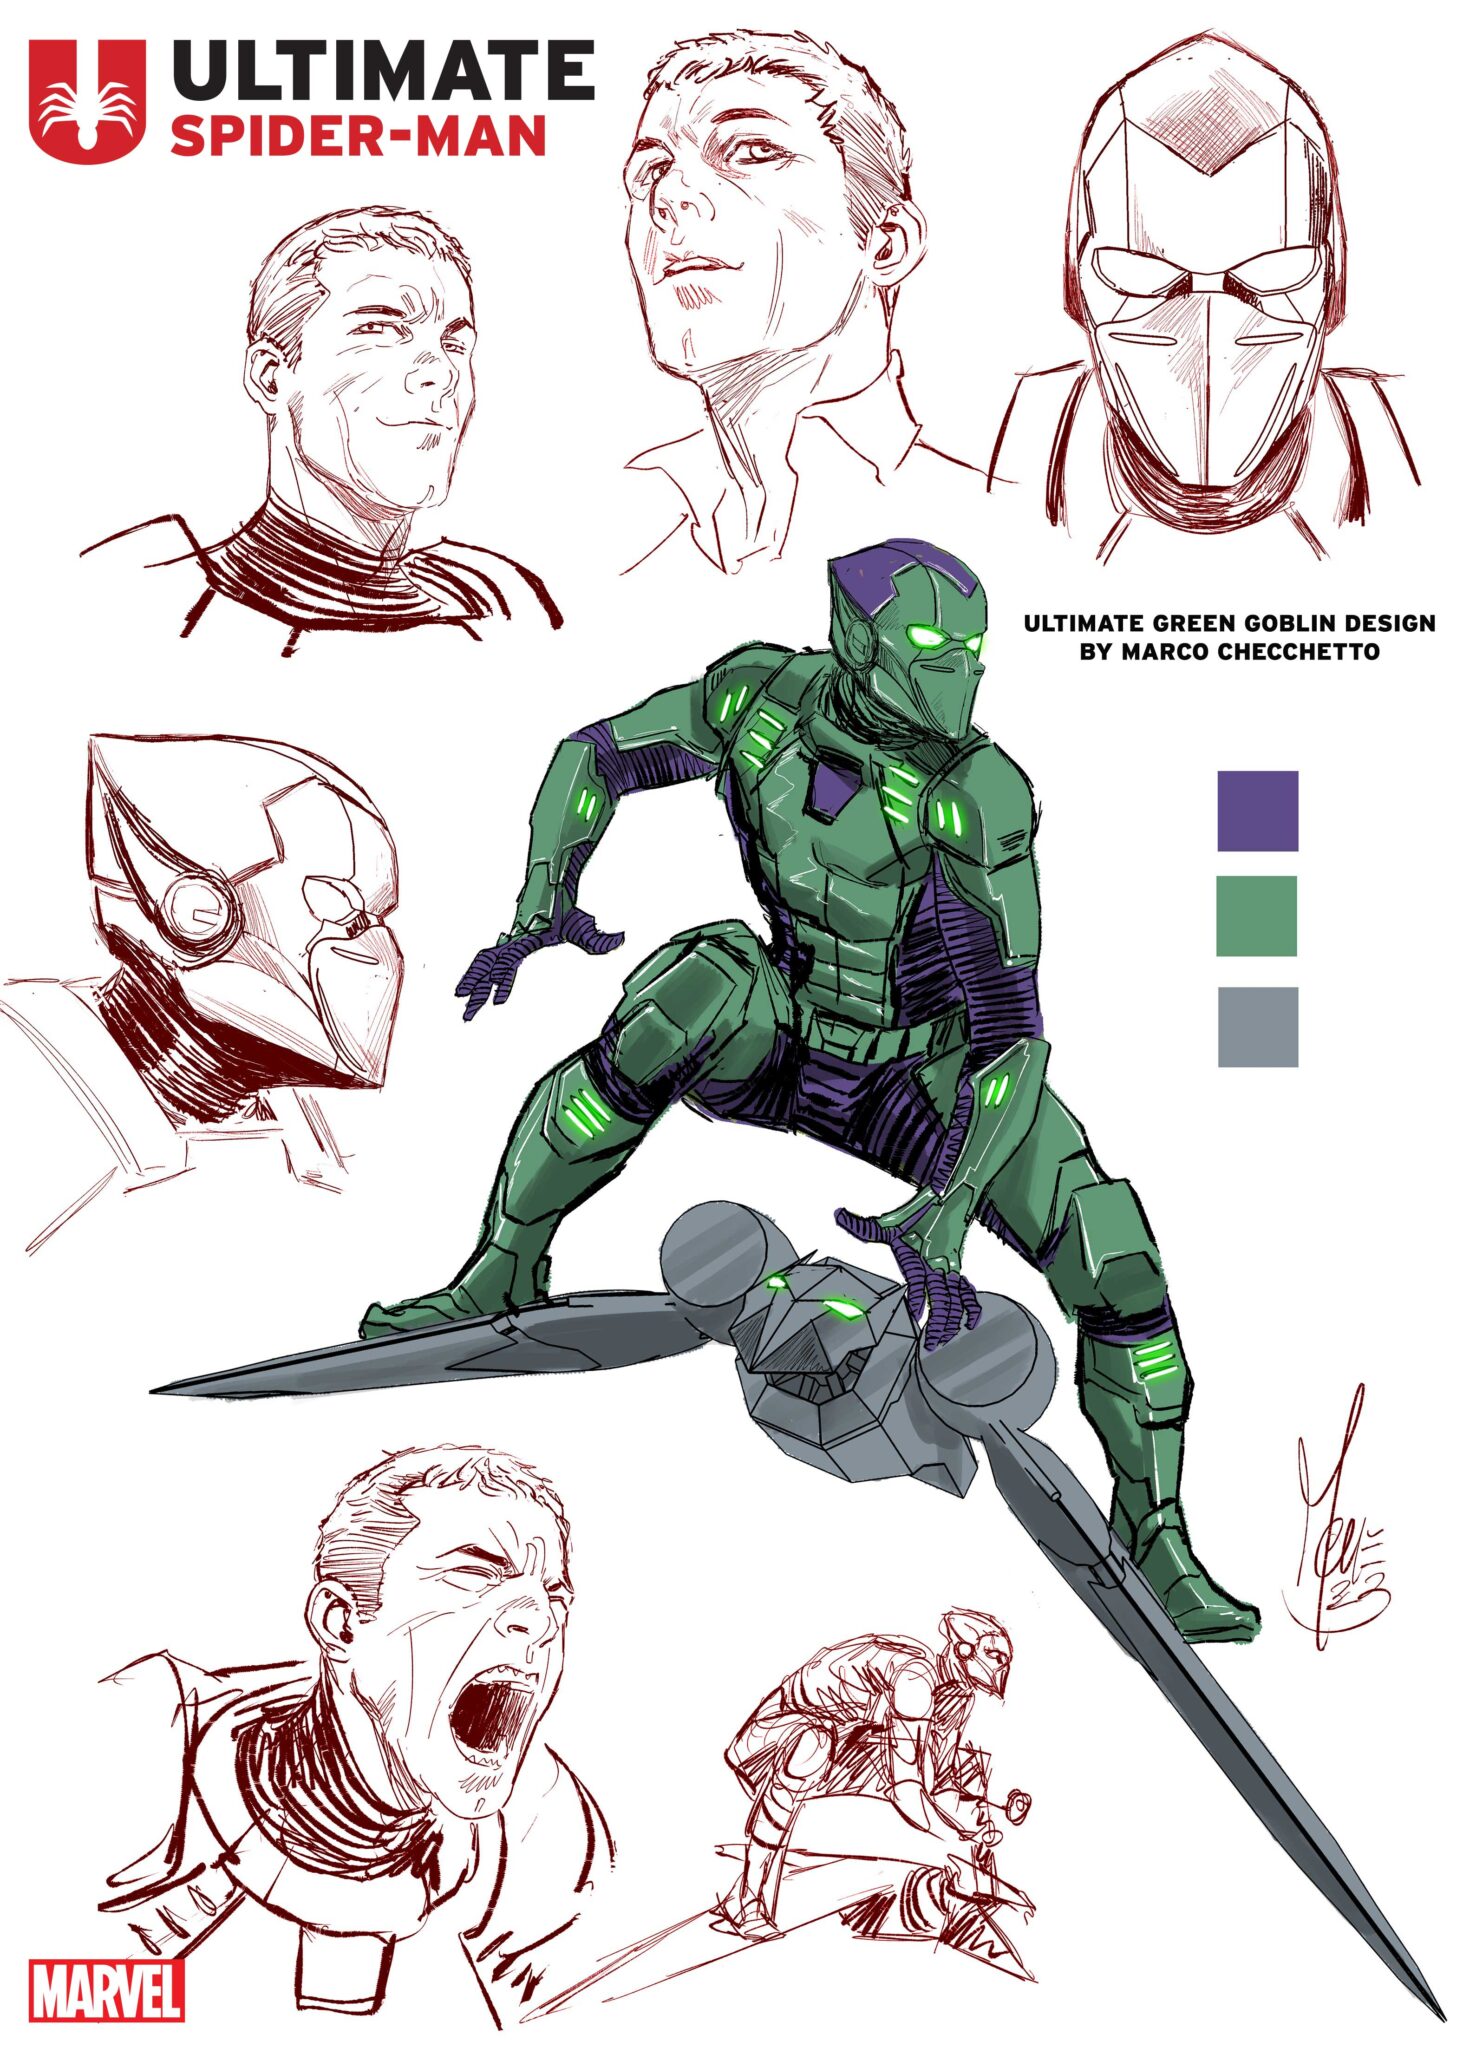 Ultimate Spider-Man  Green Goblin design